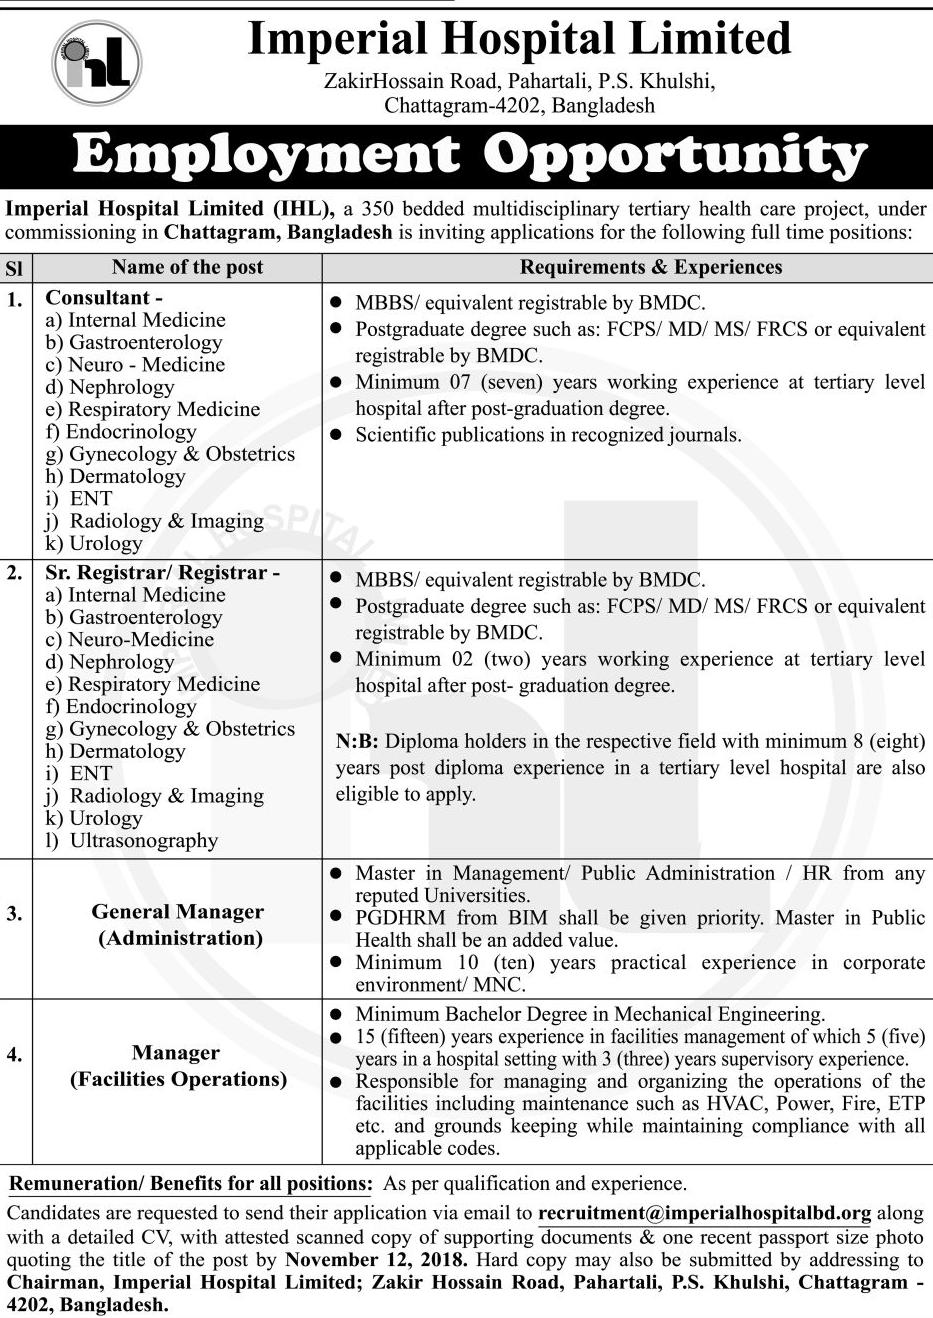 Imperial Hospital Limited (IHL) Job Circular 2018